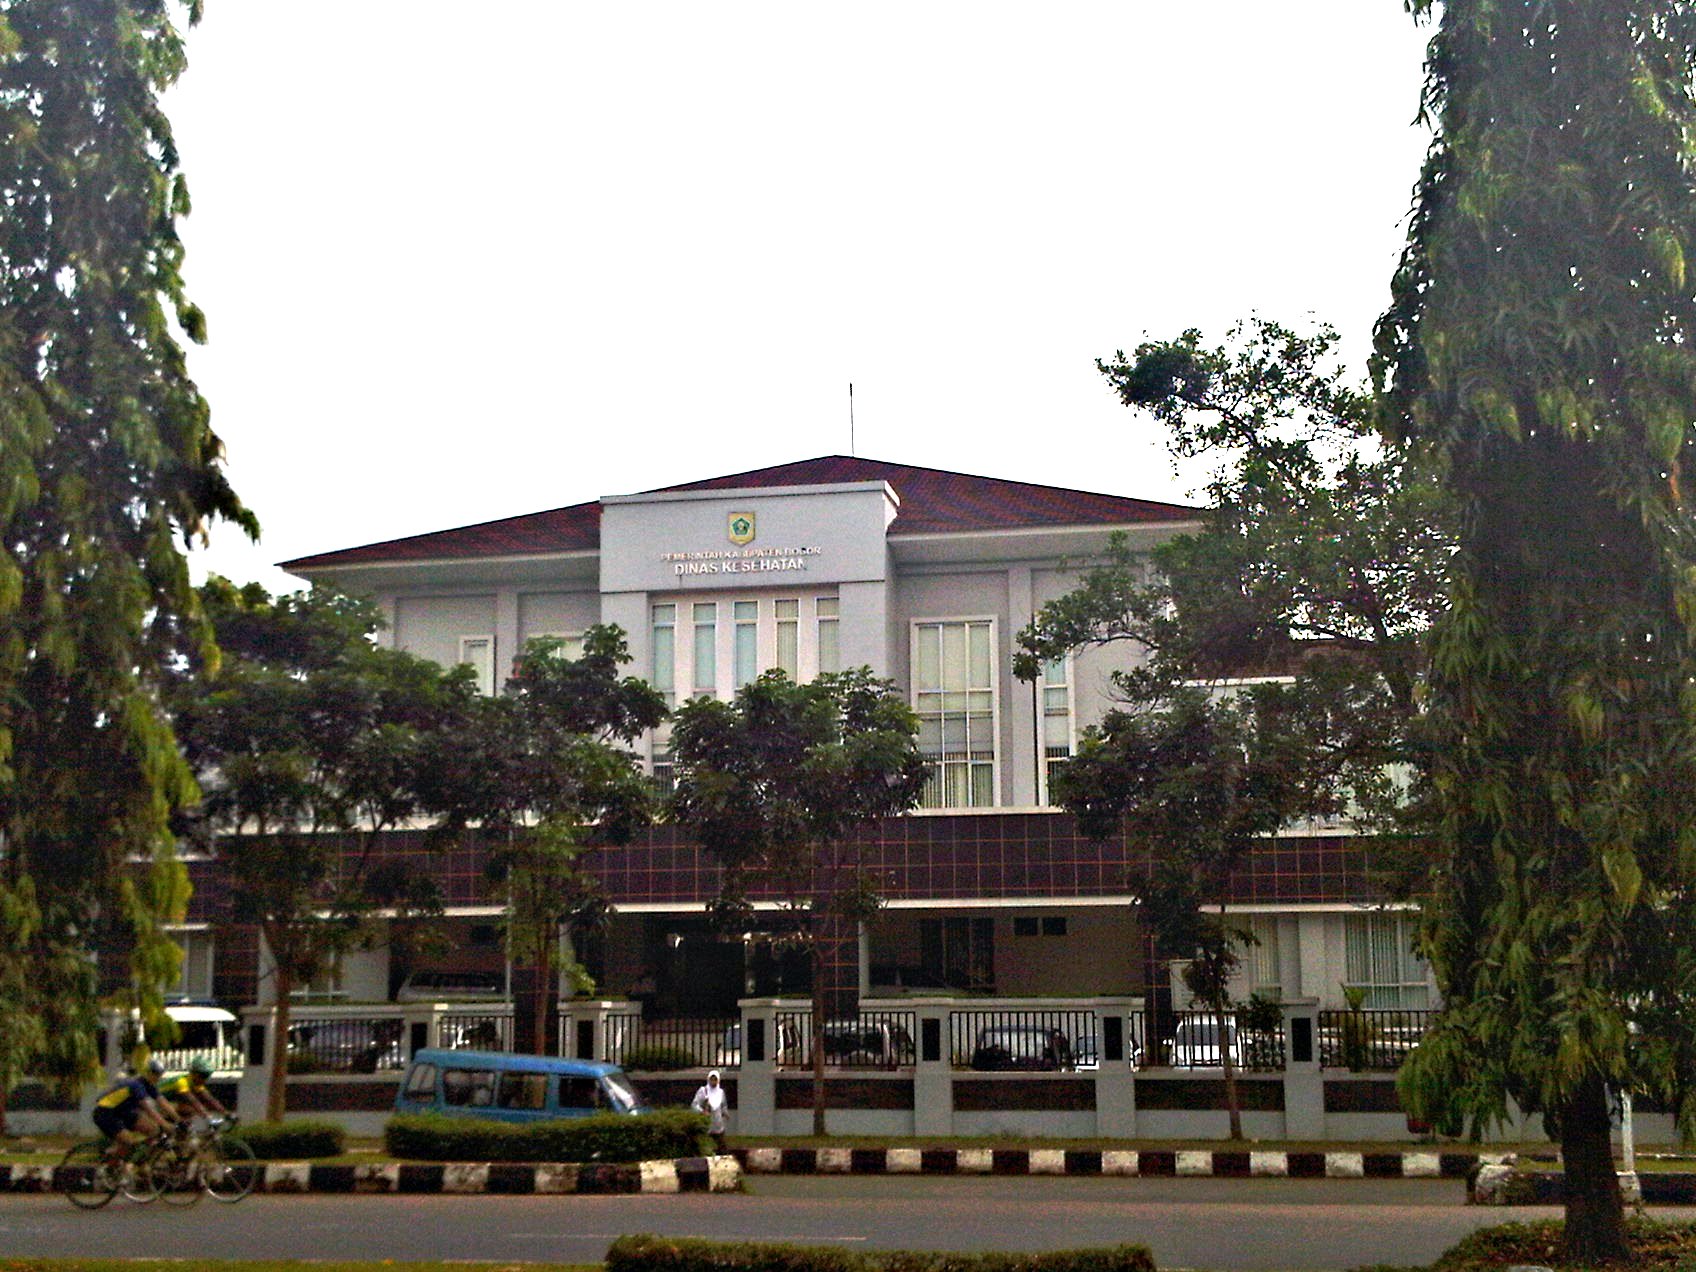 Dinas Kesehatan Kabupaten Bogor - health office - panoramio